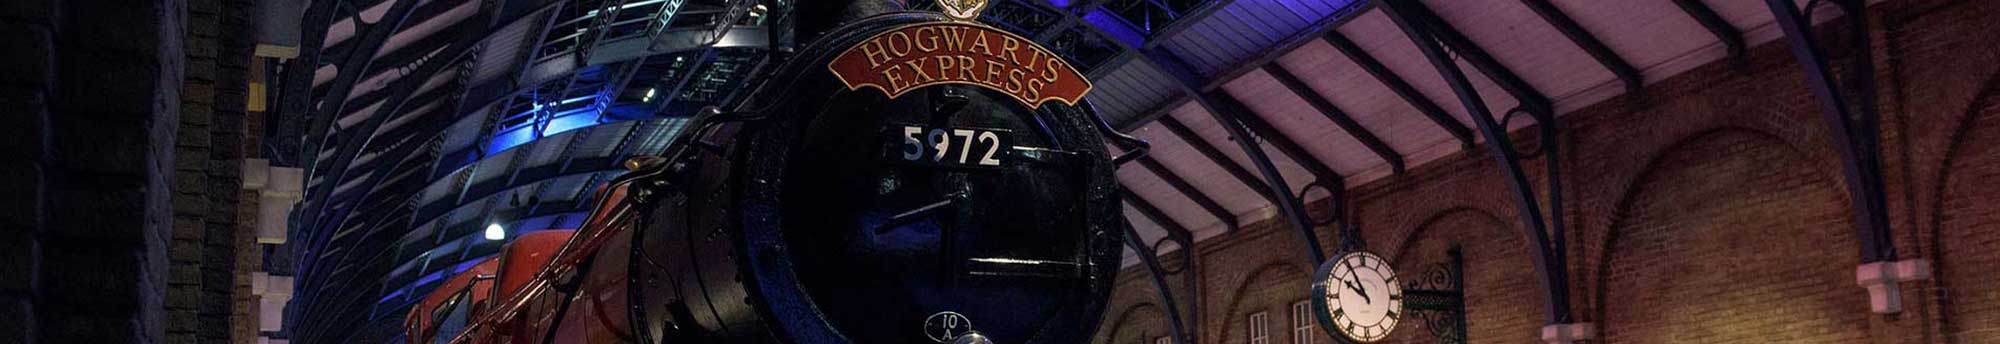 Tour Harry Potter pelos Estúdios Warner